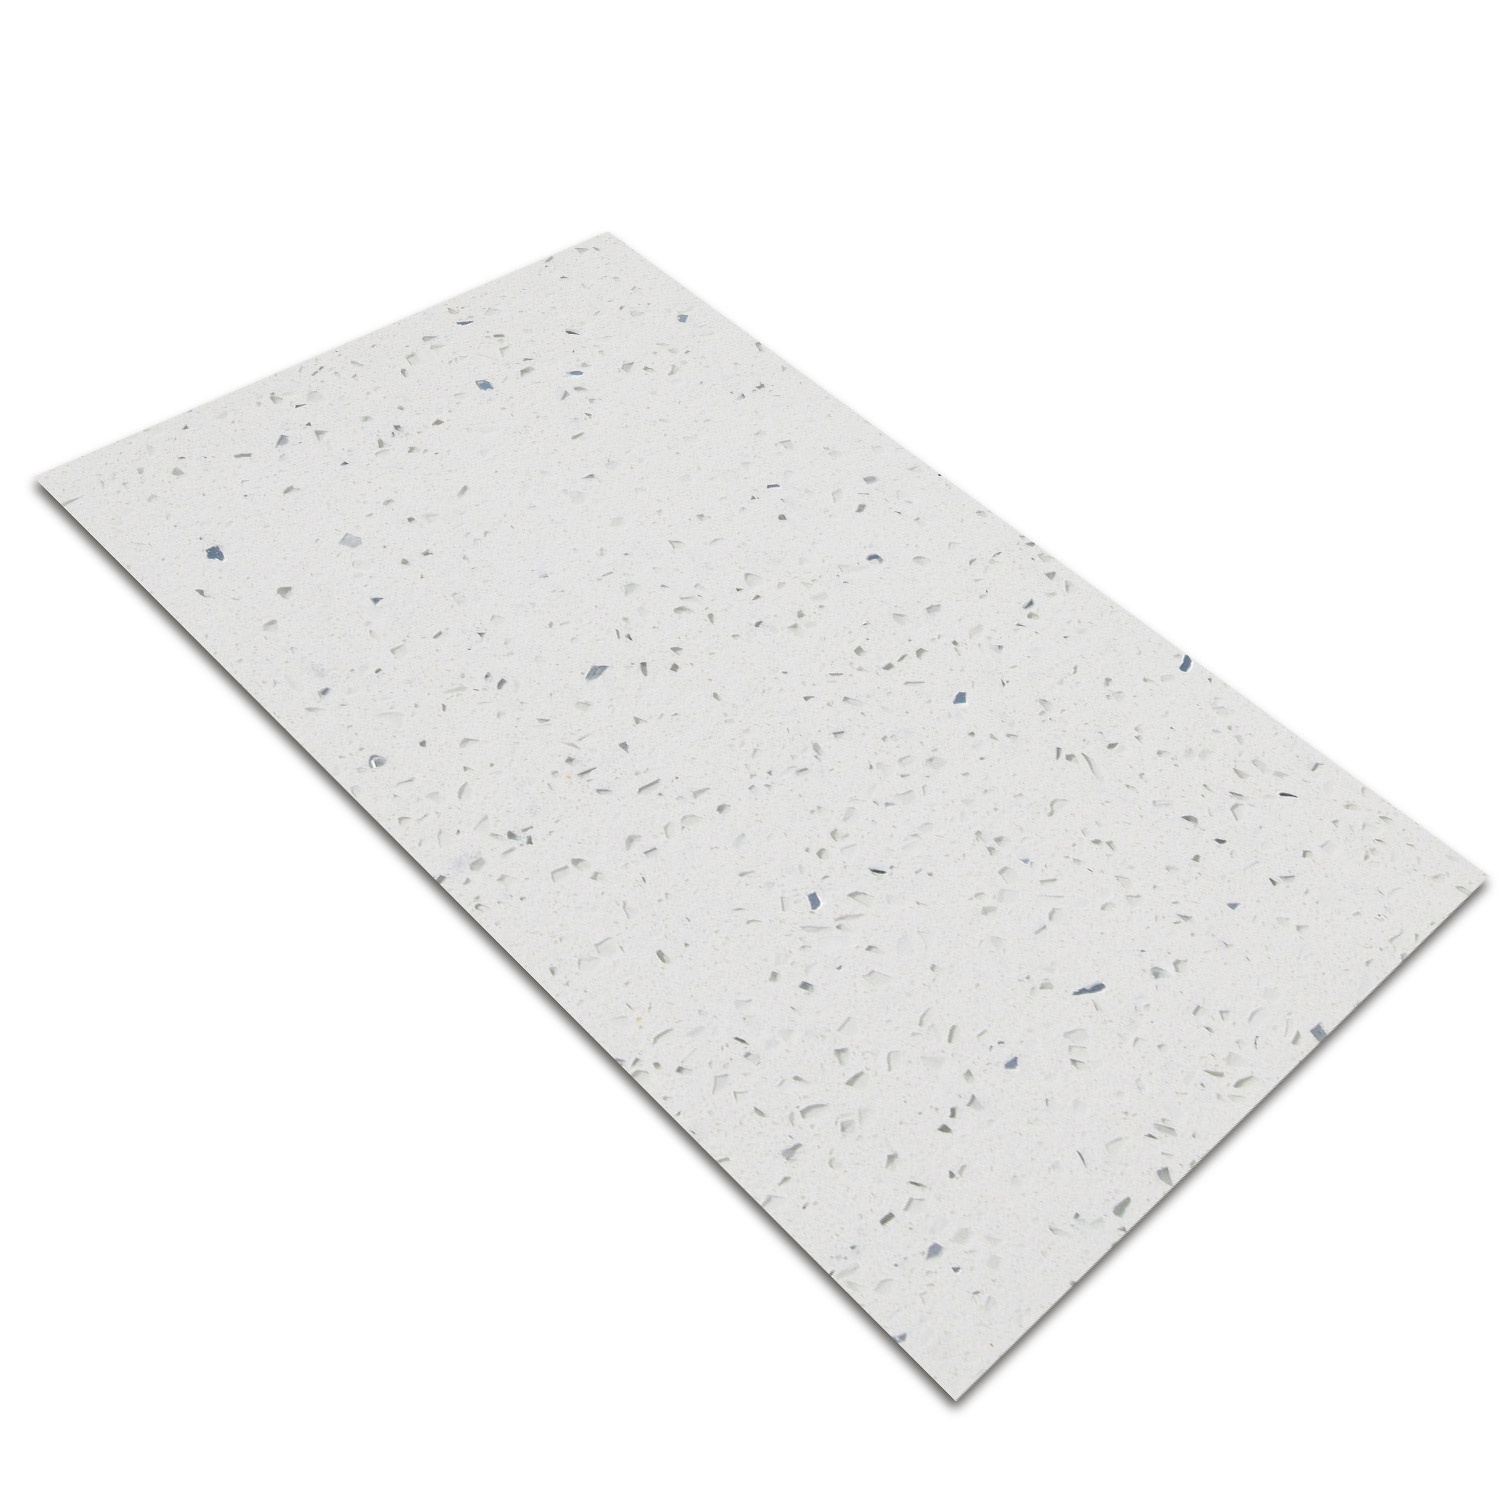 Pavimentos Cuarzo Composite Blanco 30x60cm